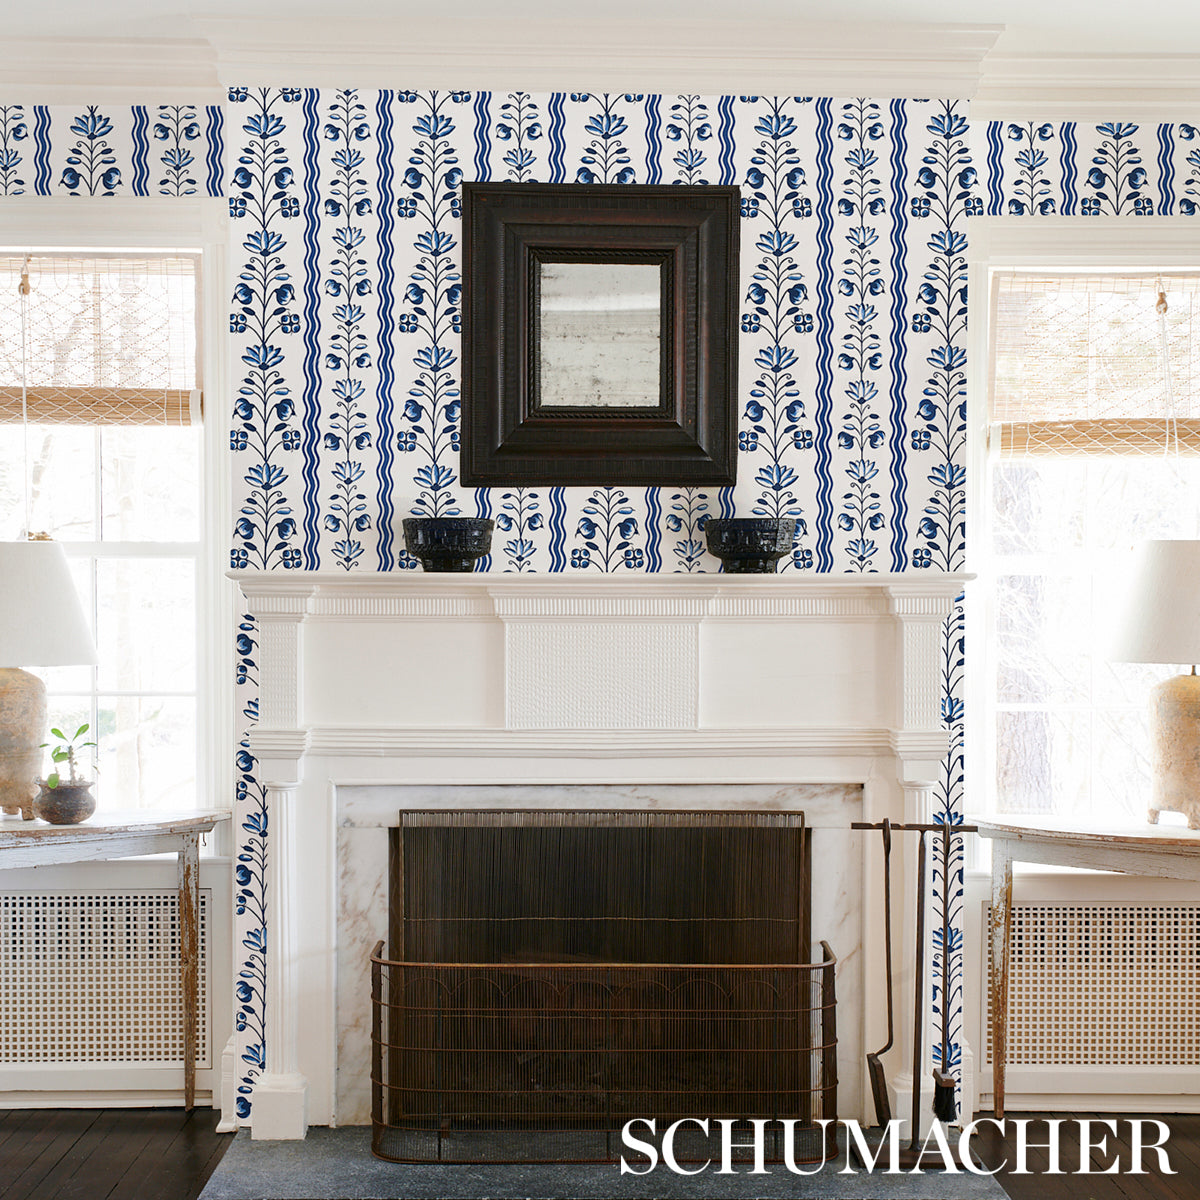 Purchase 5014380 | Delft Waves, Blue - Schumacher Wallpaper